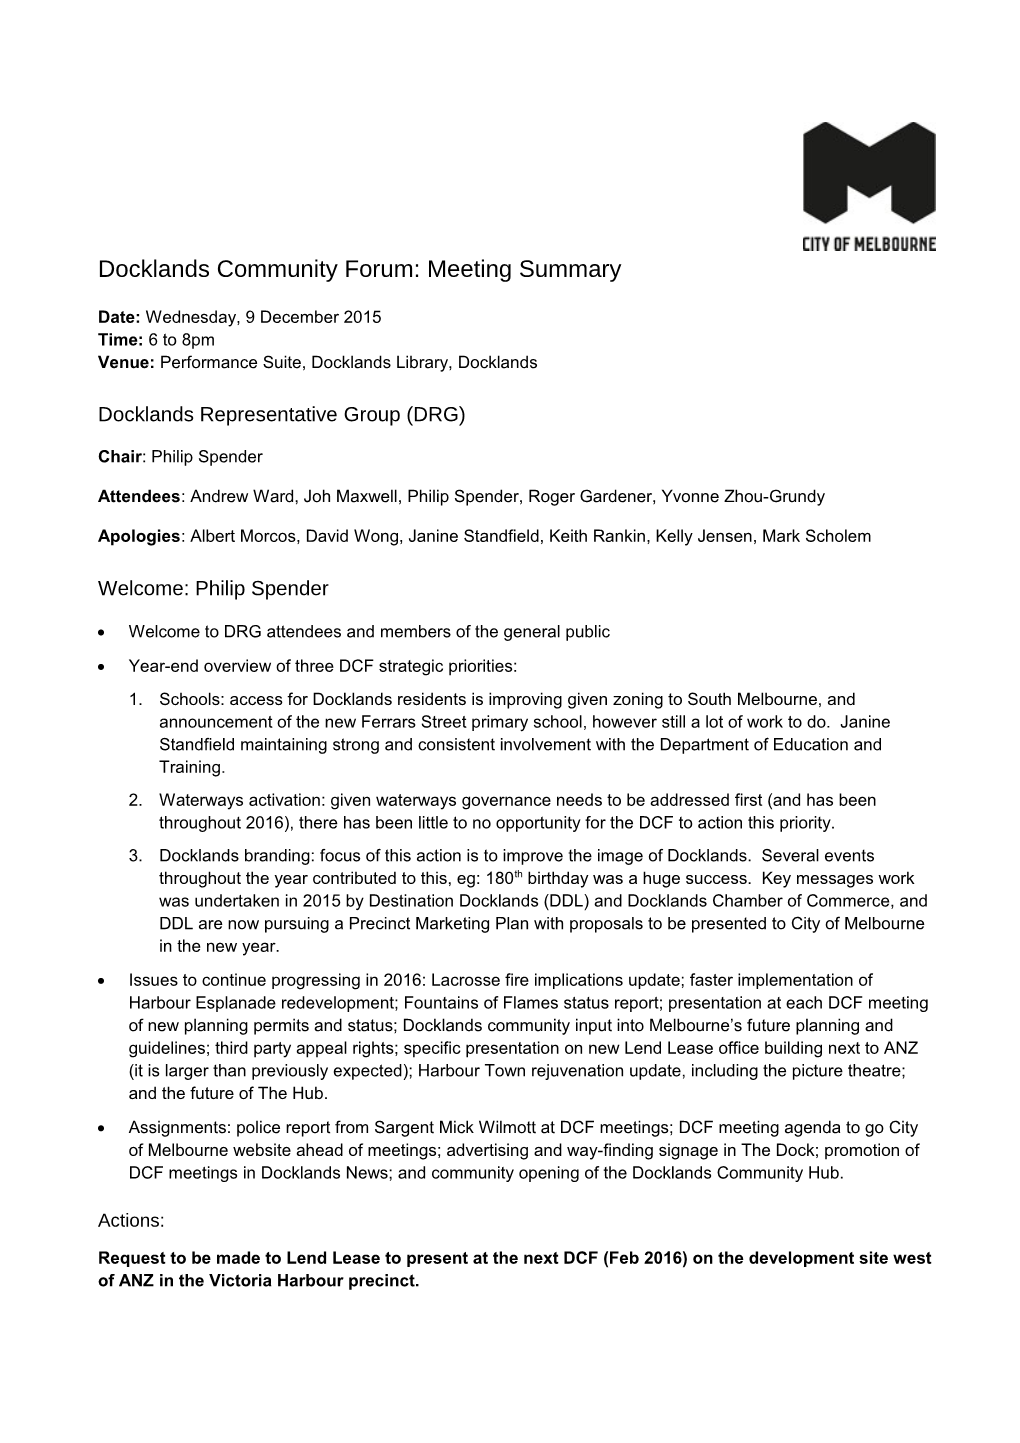 Docklands Community Forum Meeting Summary 9 December 2015